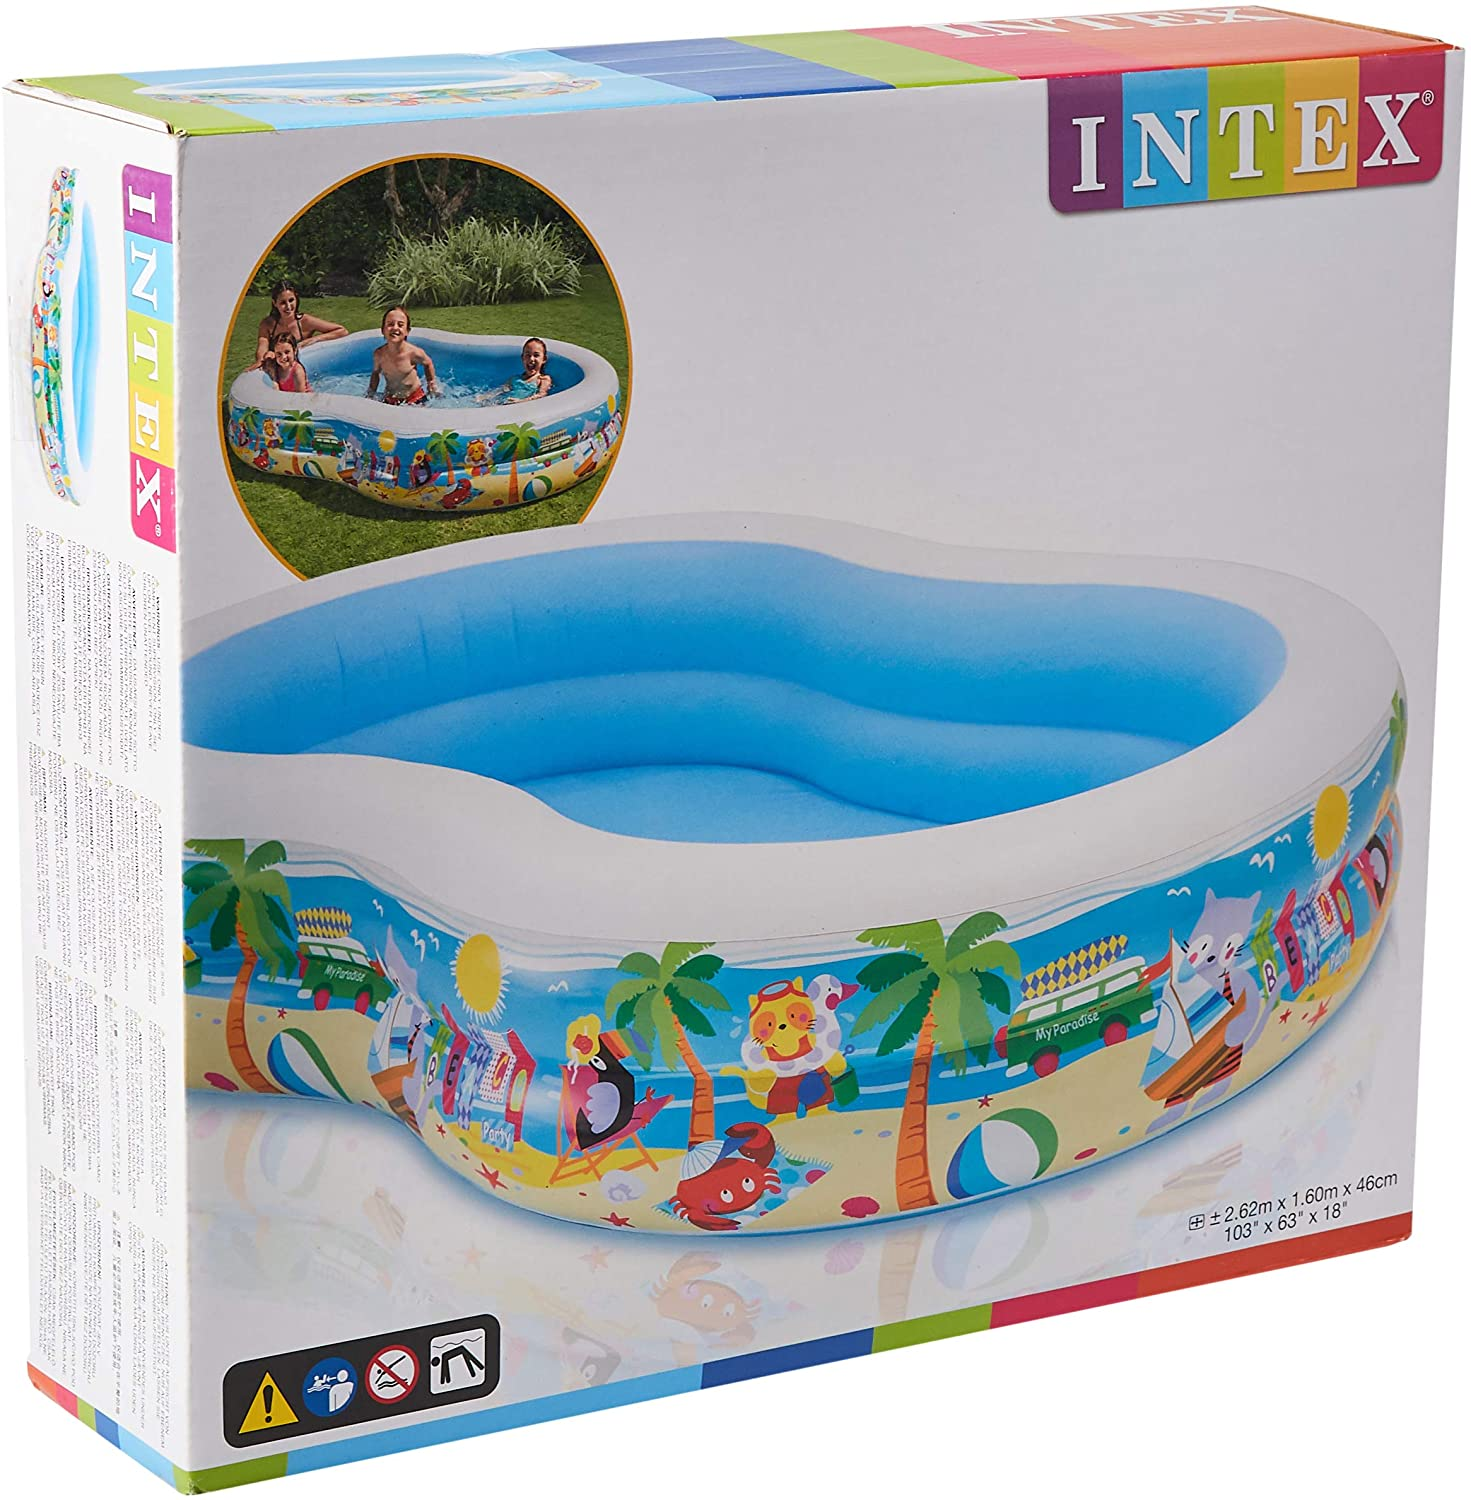 INTEX Paradise mehrfarbig Planschbecken, 262x160x46cm